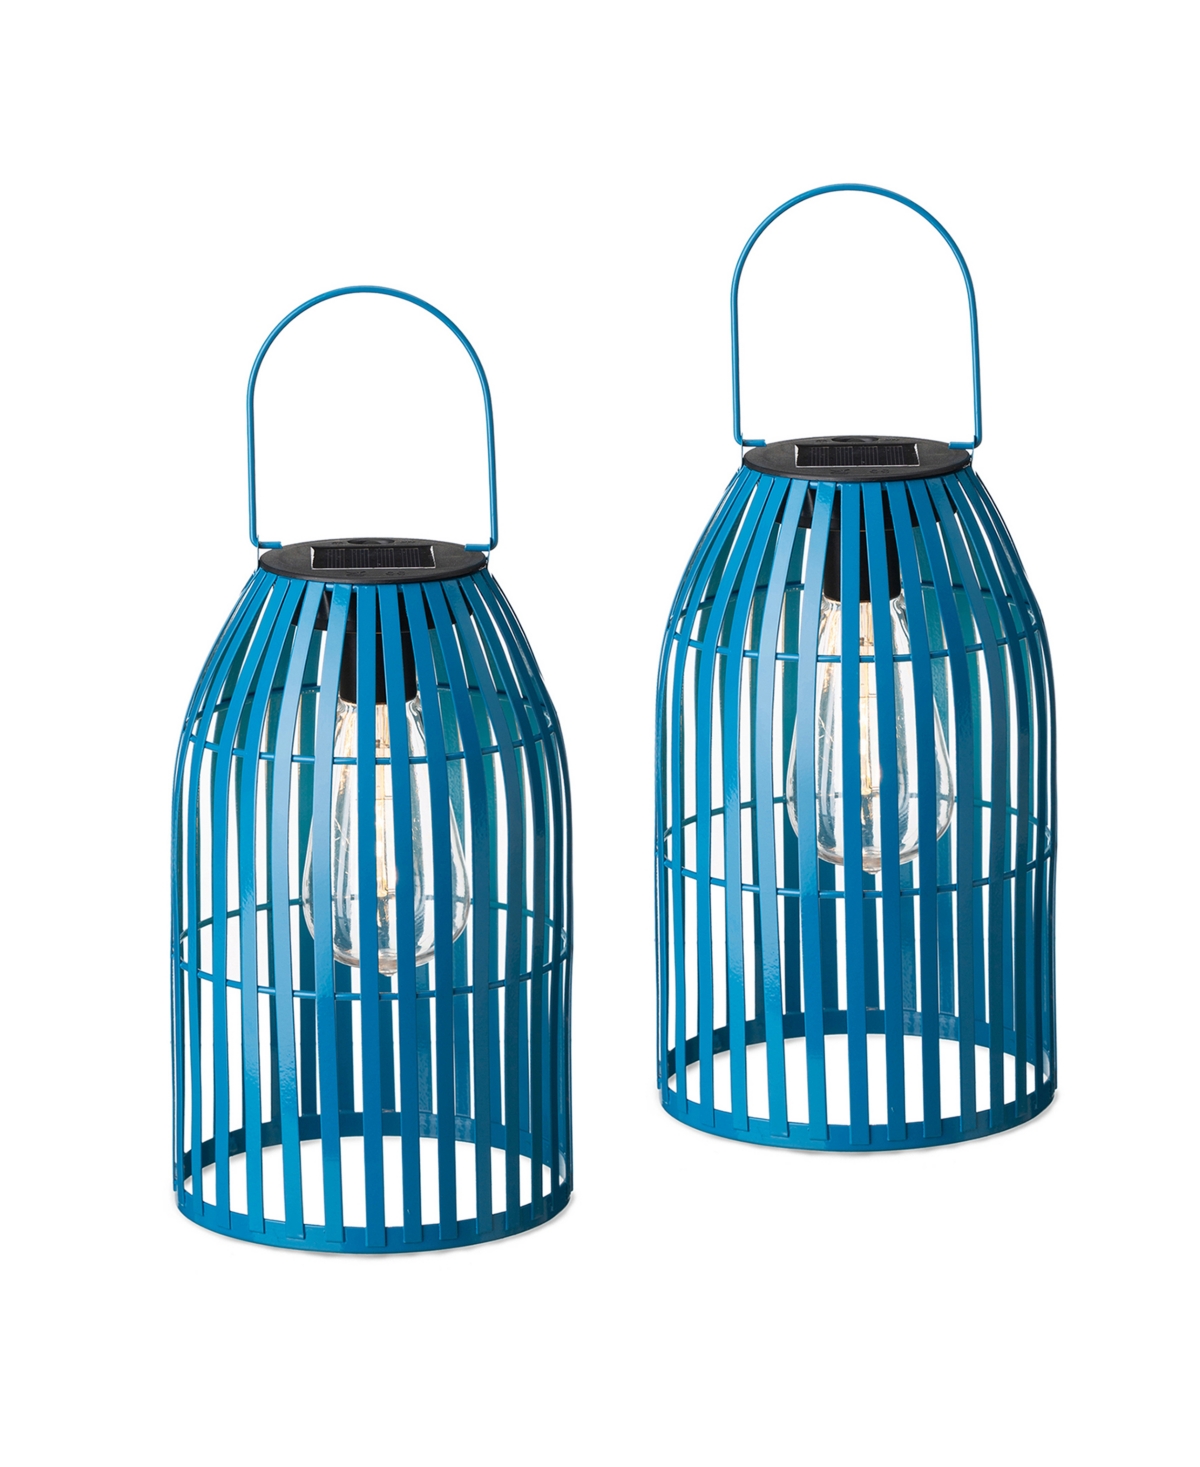 9.75" H Metal Woven Solar Powered Outdoor Hanging Lantern, Set of 2 - Blue